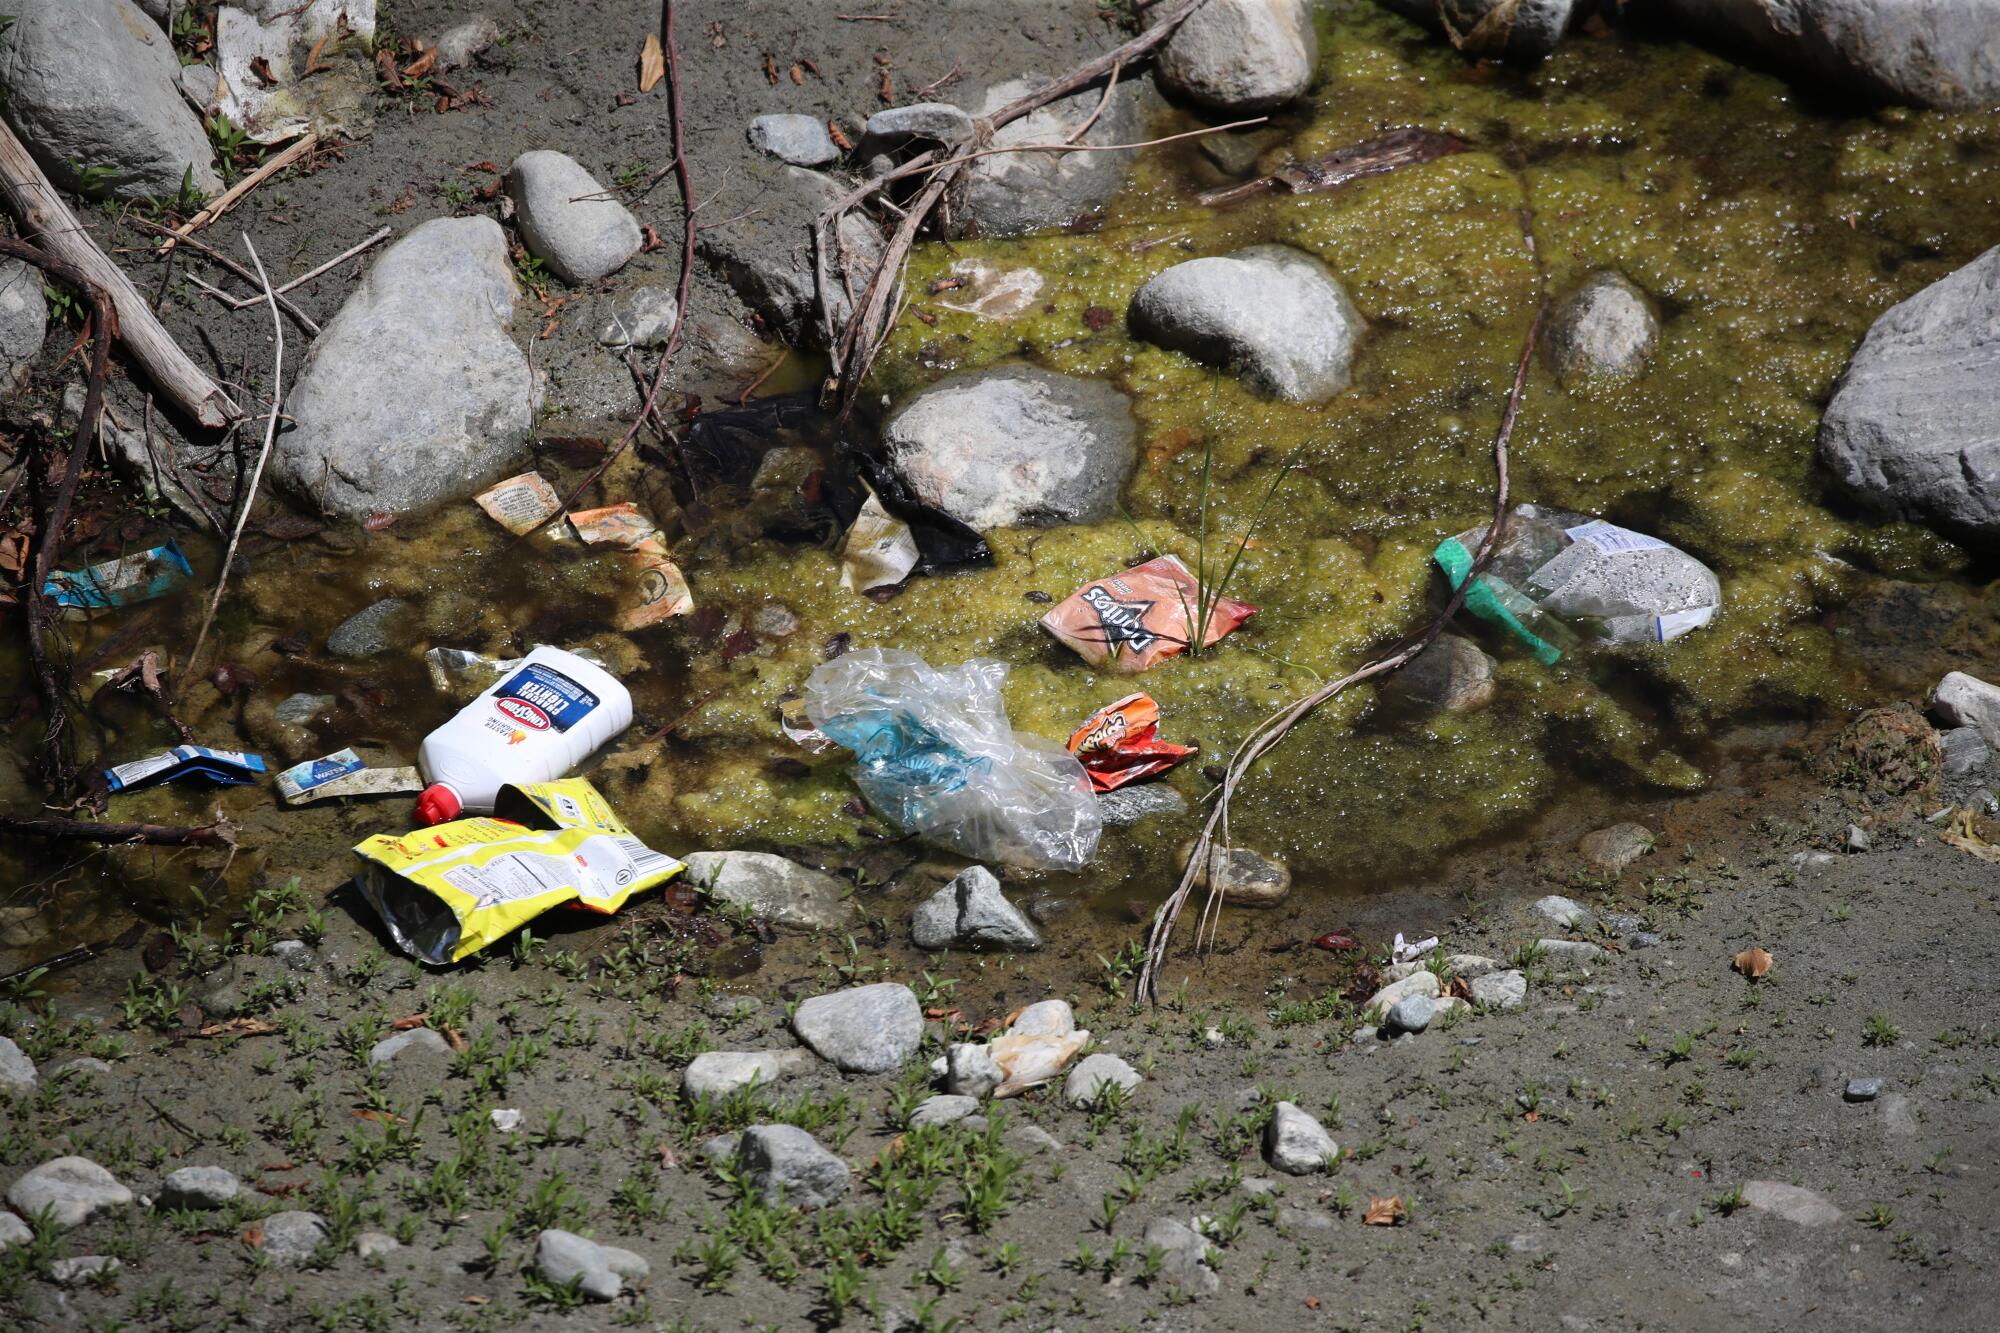 Trash litters a mossy patch of rocks.